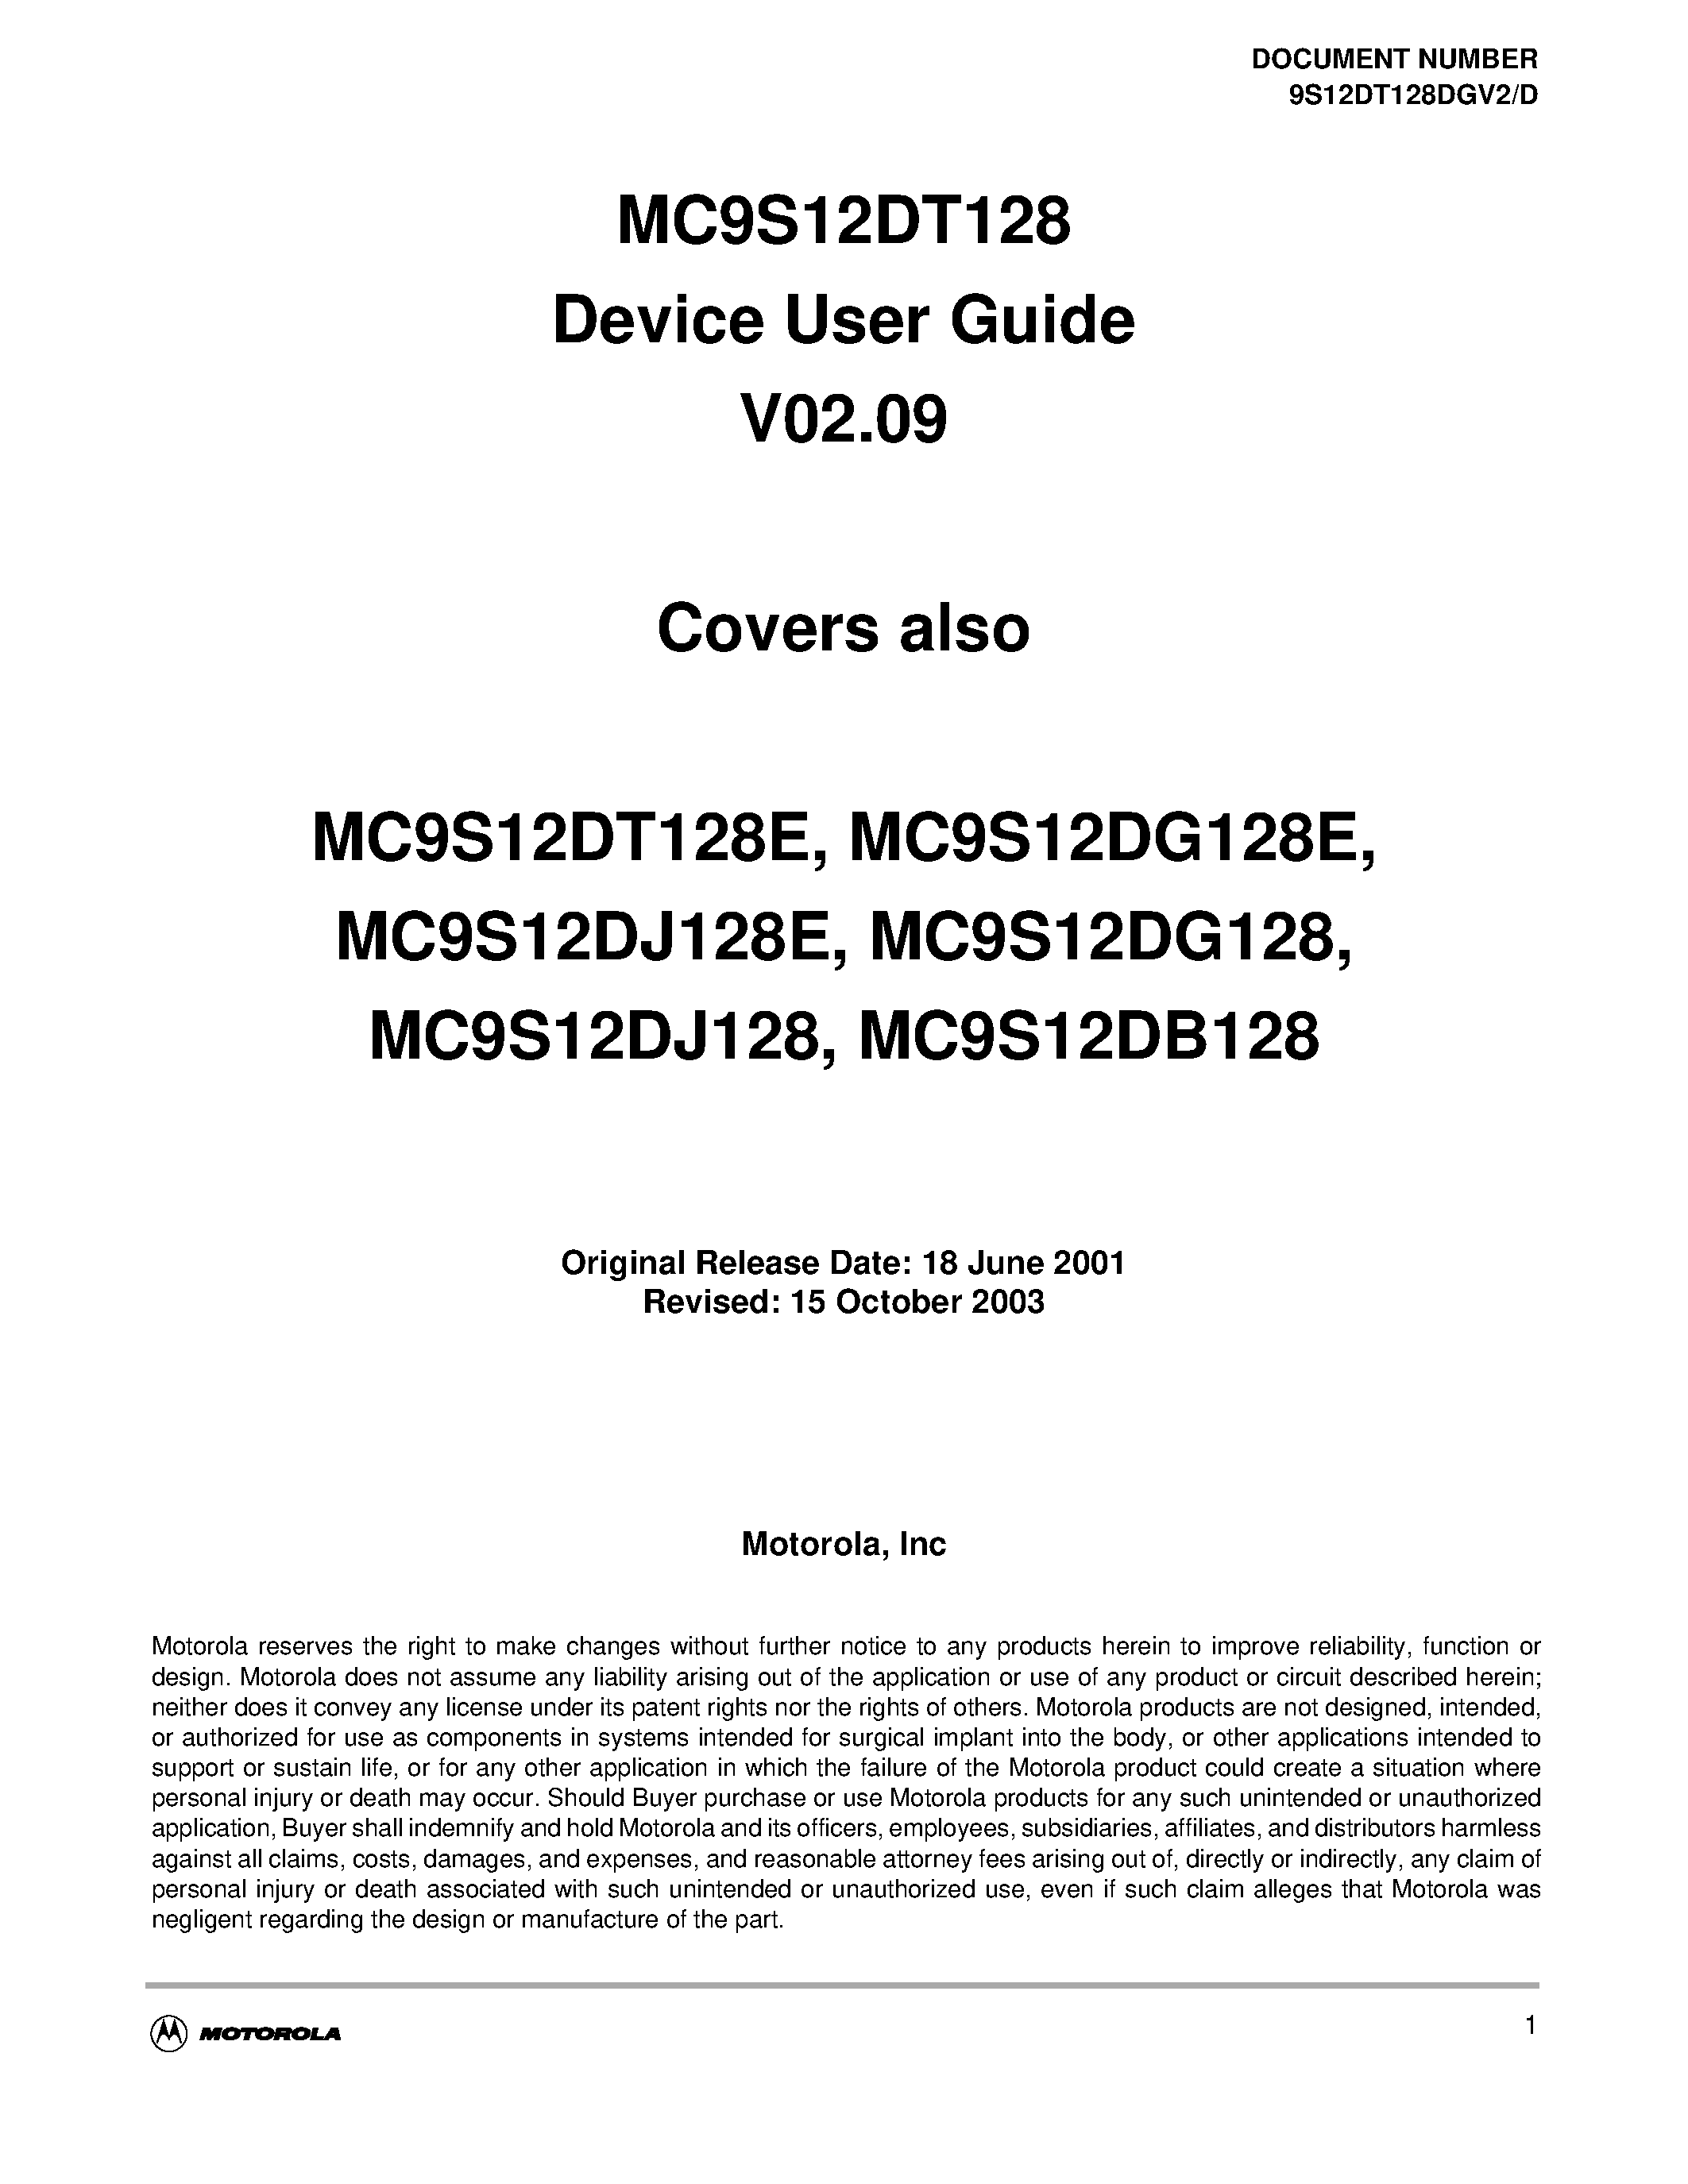 Datasheet S12EETS2KV1D - MC9S12DT128 Device User Guide V02.09 page 1